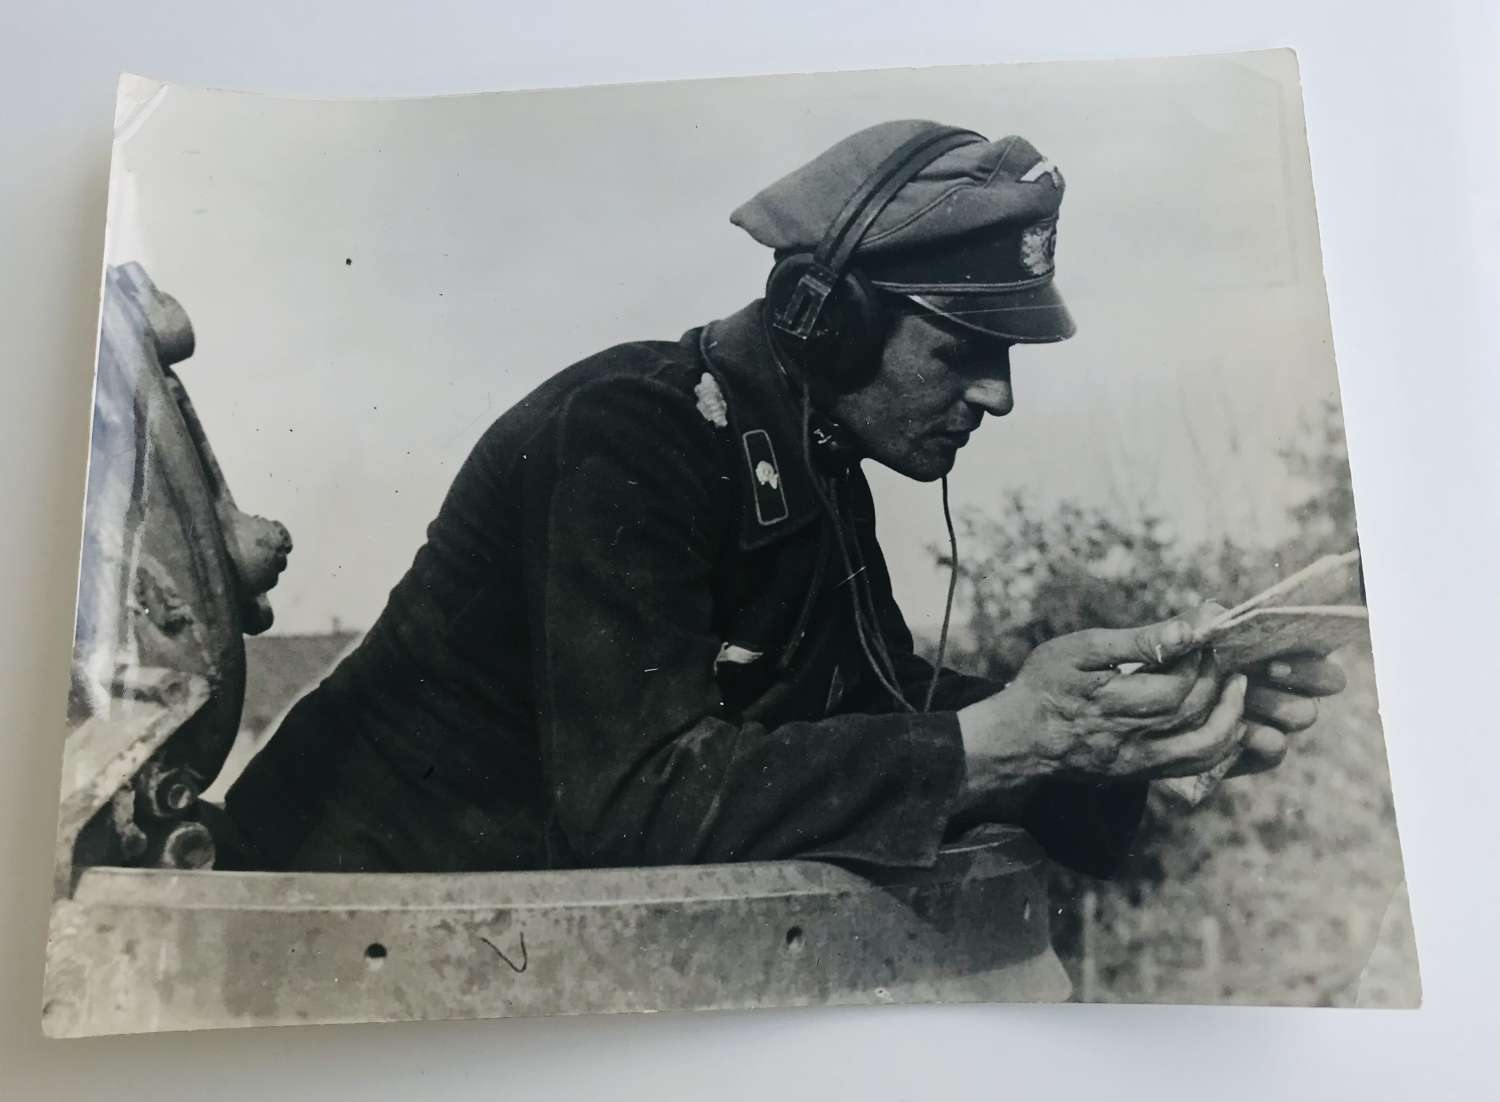 Original press photo of tiger tank commander